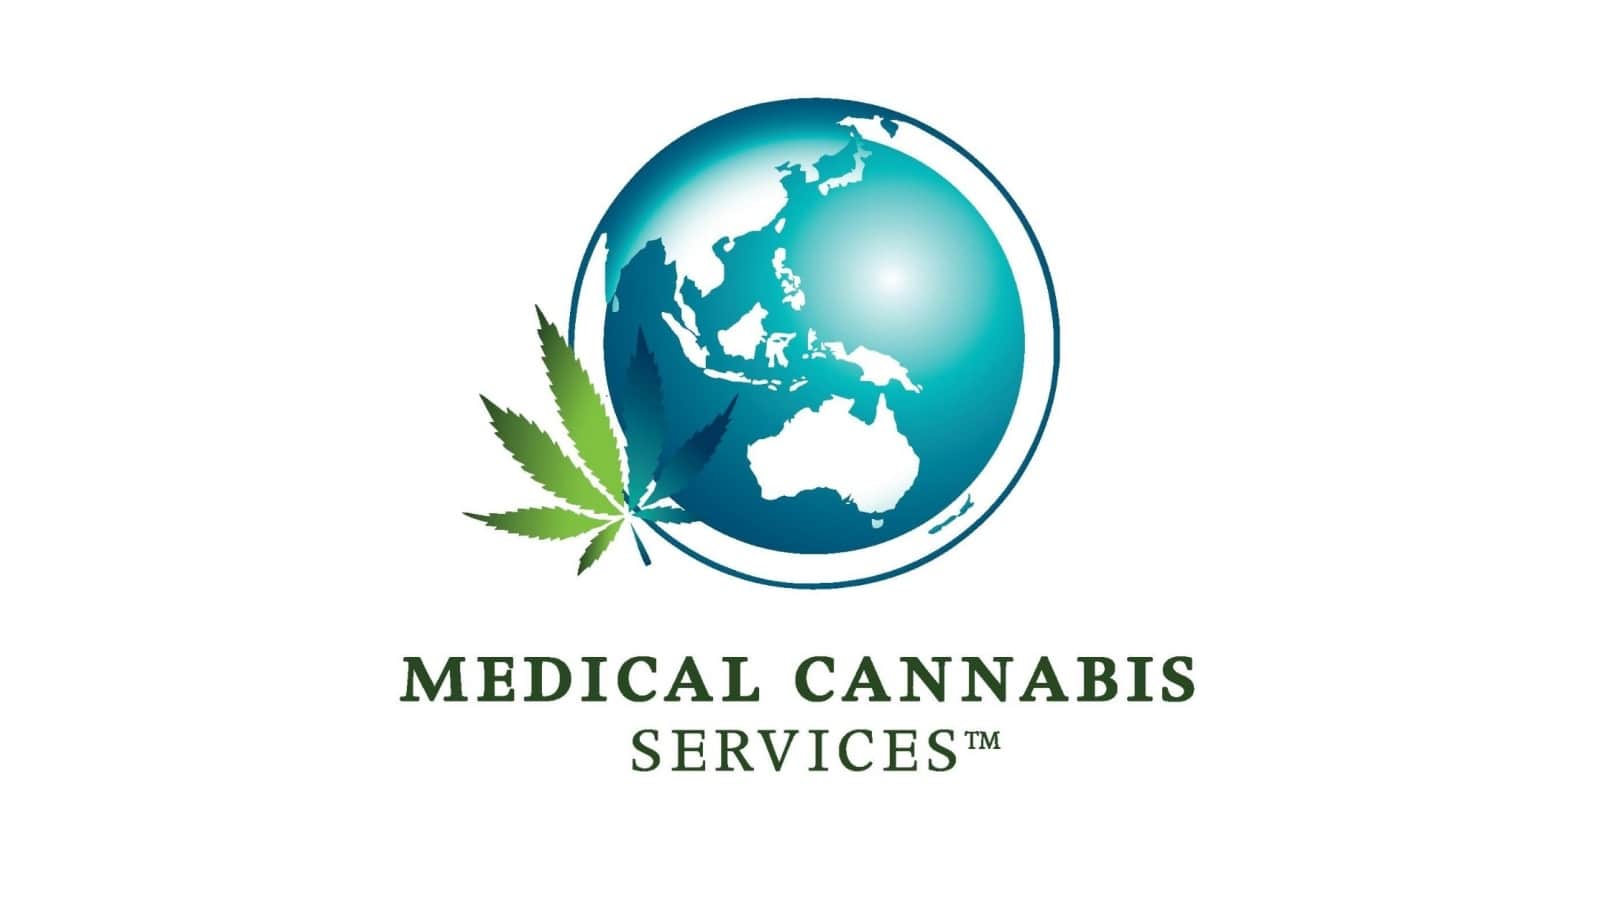 Medical Cannabis Services: Brisbane Clinic Guide